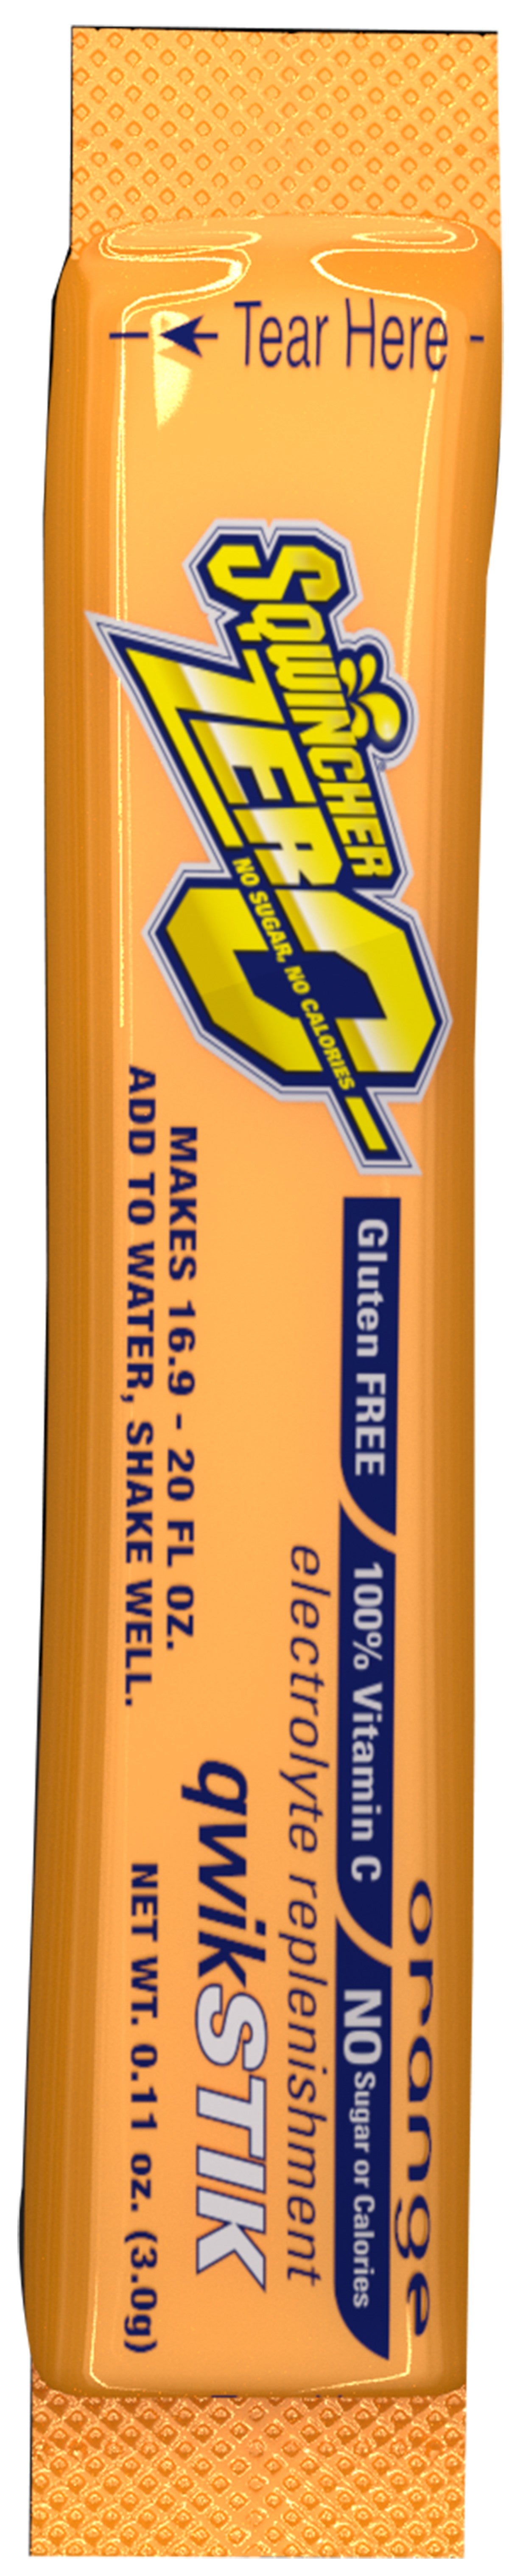 Sqwincher Quik Stik® Zero Electrolyte Drink Mix - M2600 - Medsitis